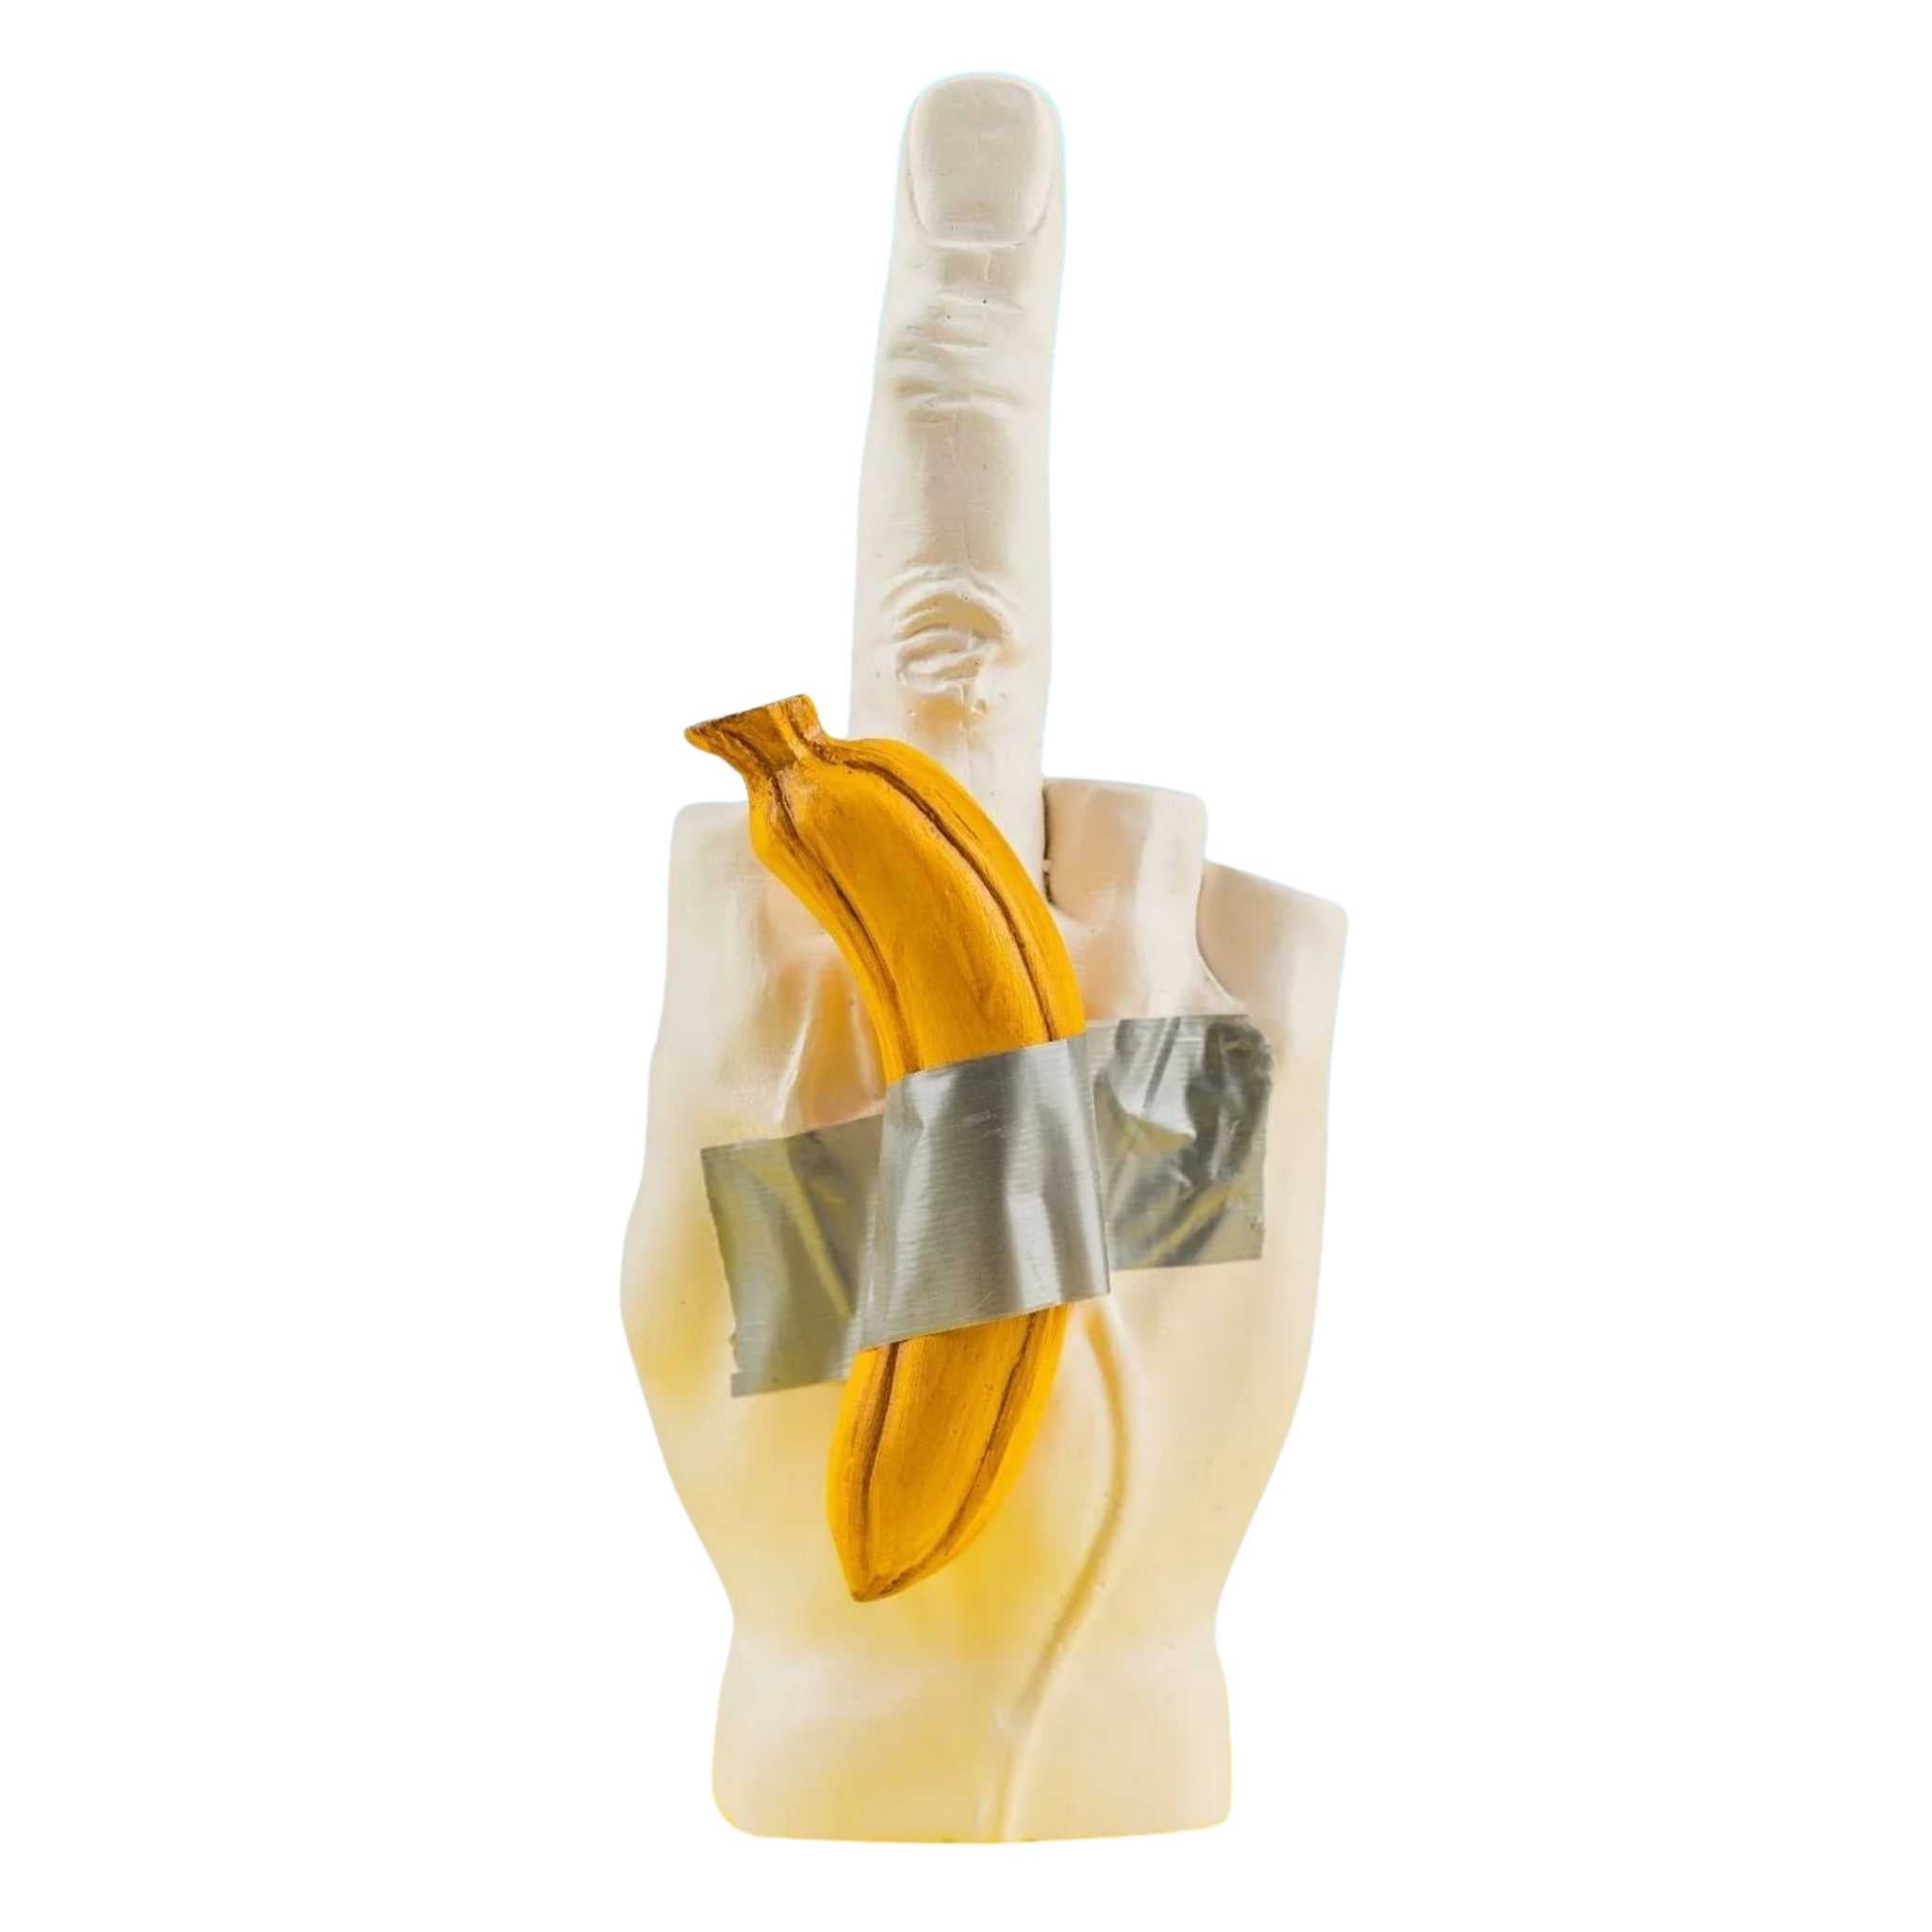 Banana Grab: The Banksy Sculpture with Hand